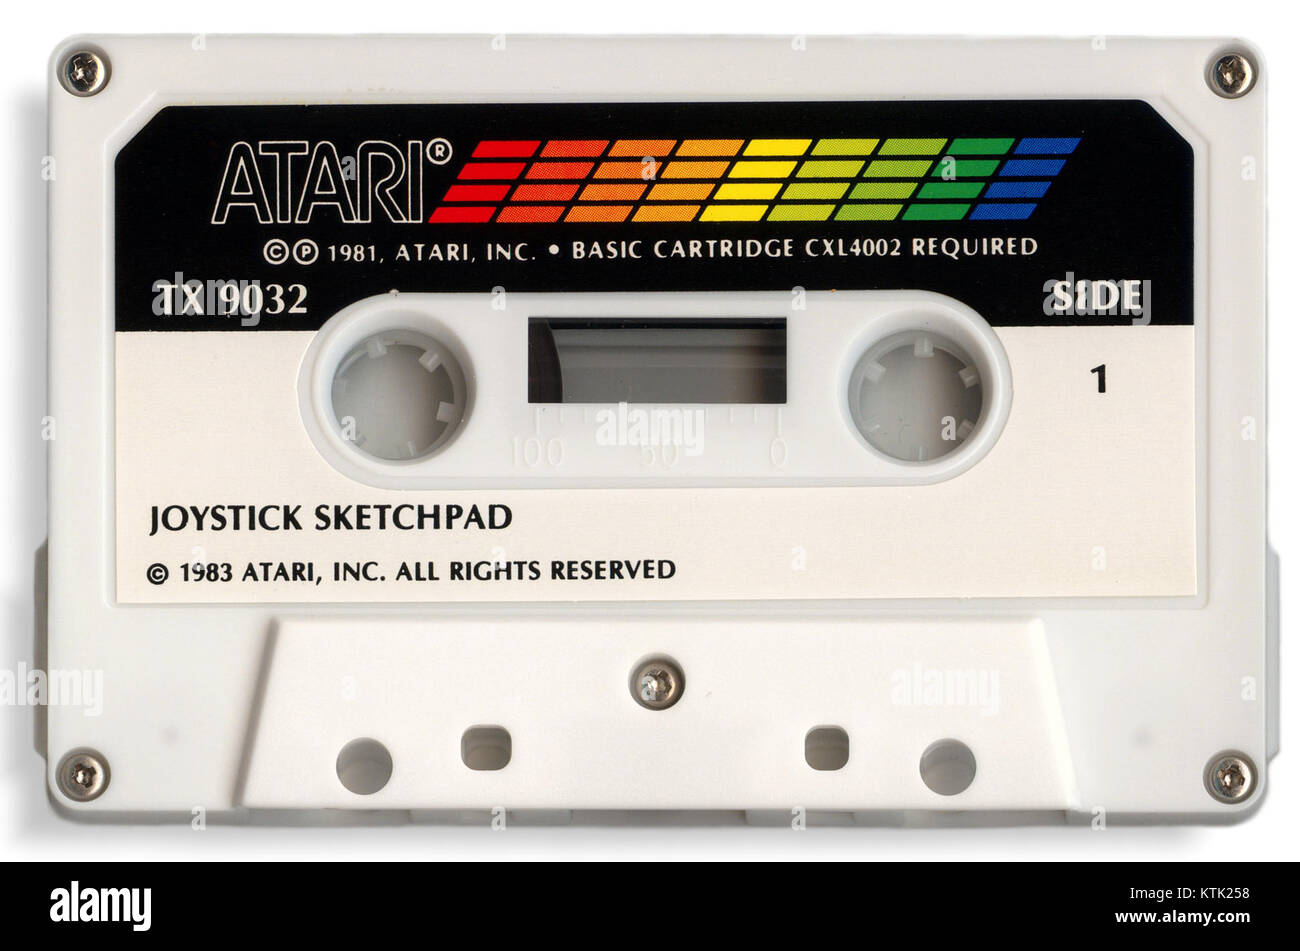 Atari Computer Program Cassette Joystick Sketchpad TX 9032 A Stock Photo